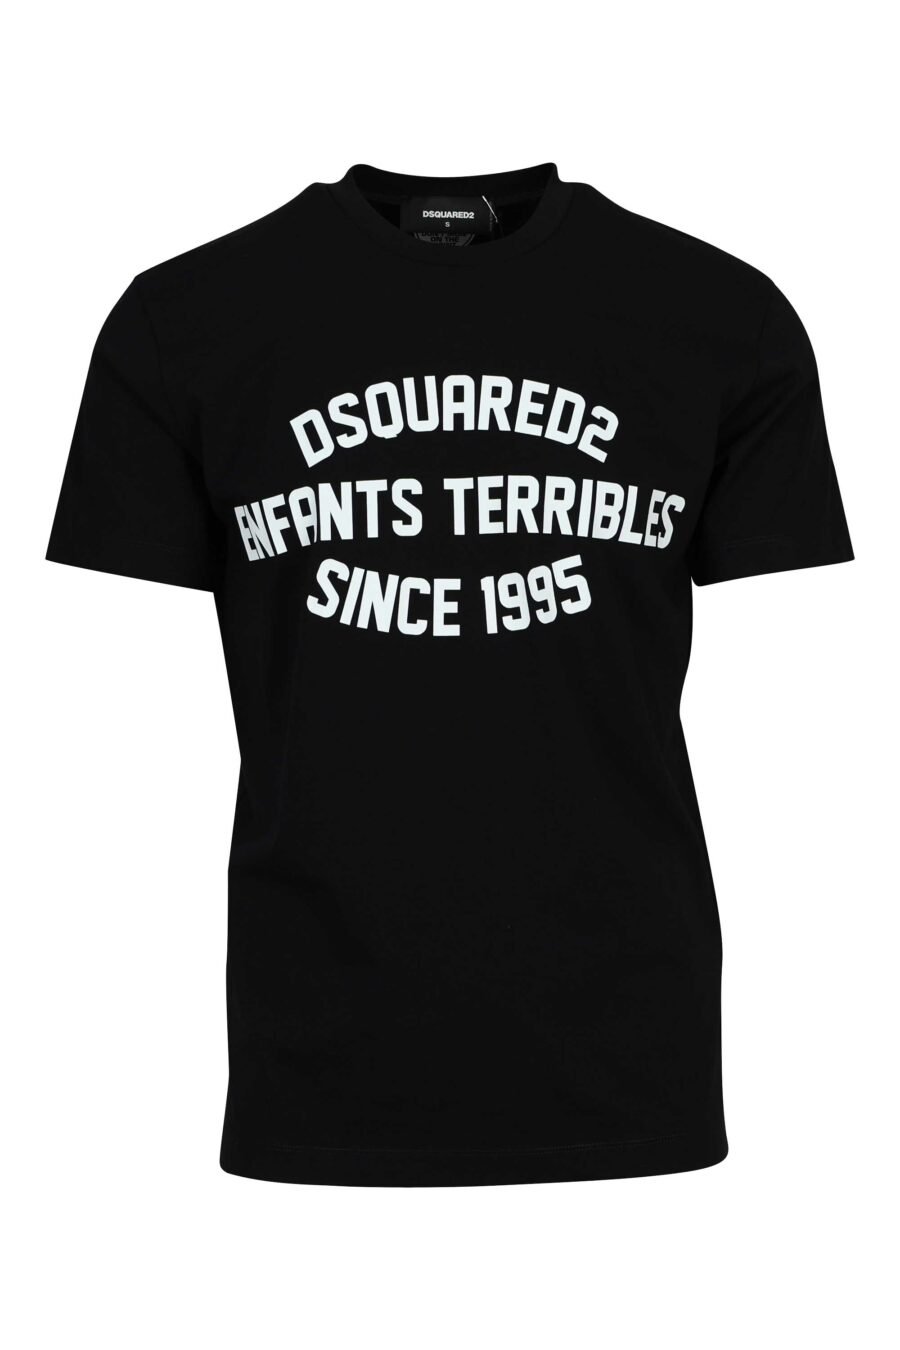 Camiseta negra con maxilogo "enfants terribles since 1995" - 8054148504212